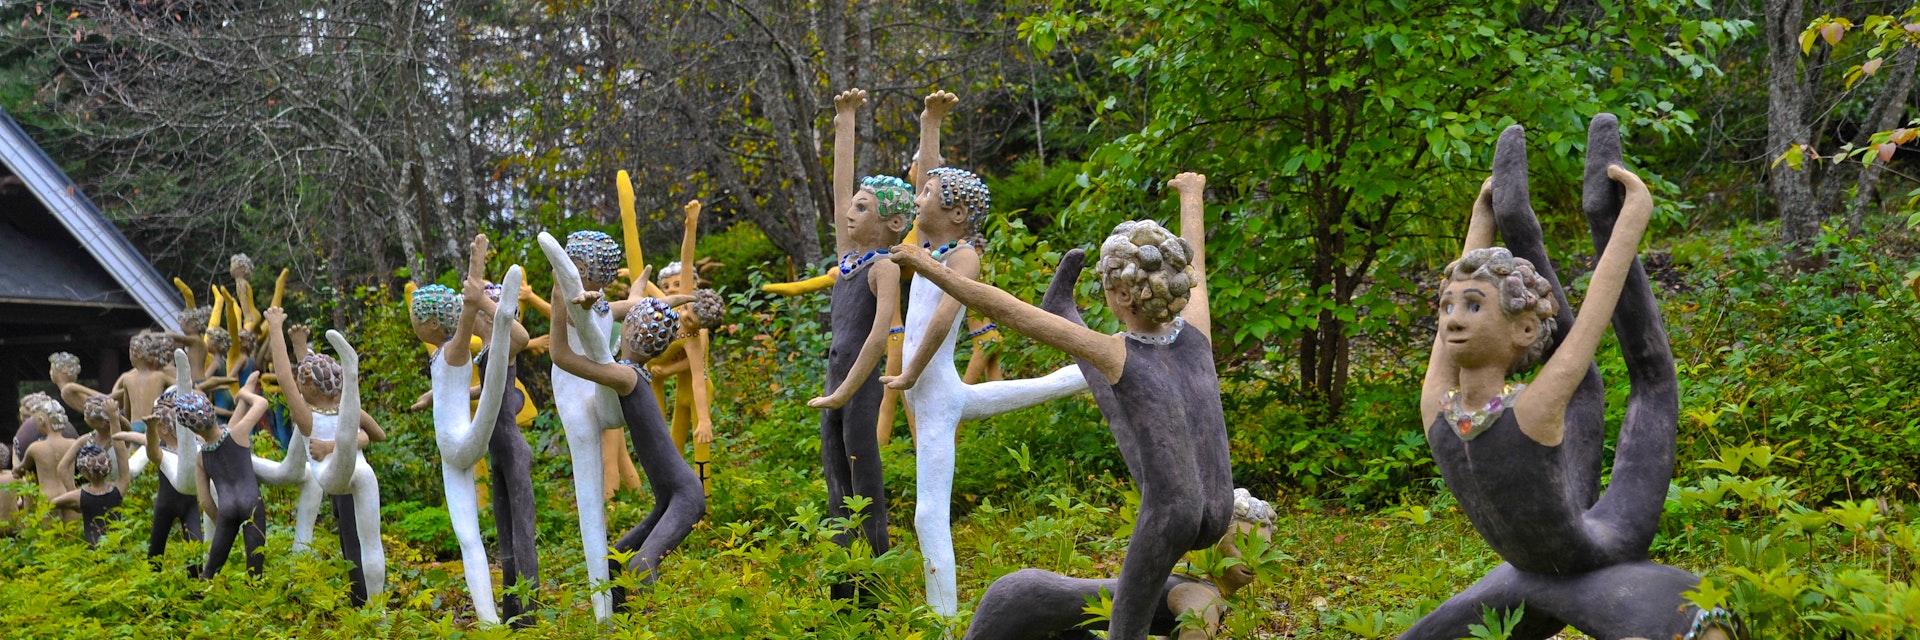 Sculptures by Veijo Ronkkonen in his sculpture park, Parikkalan Patsaspuisto.